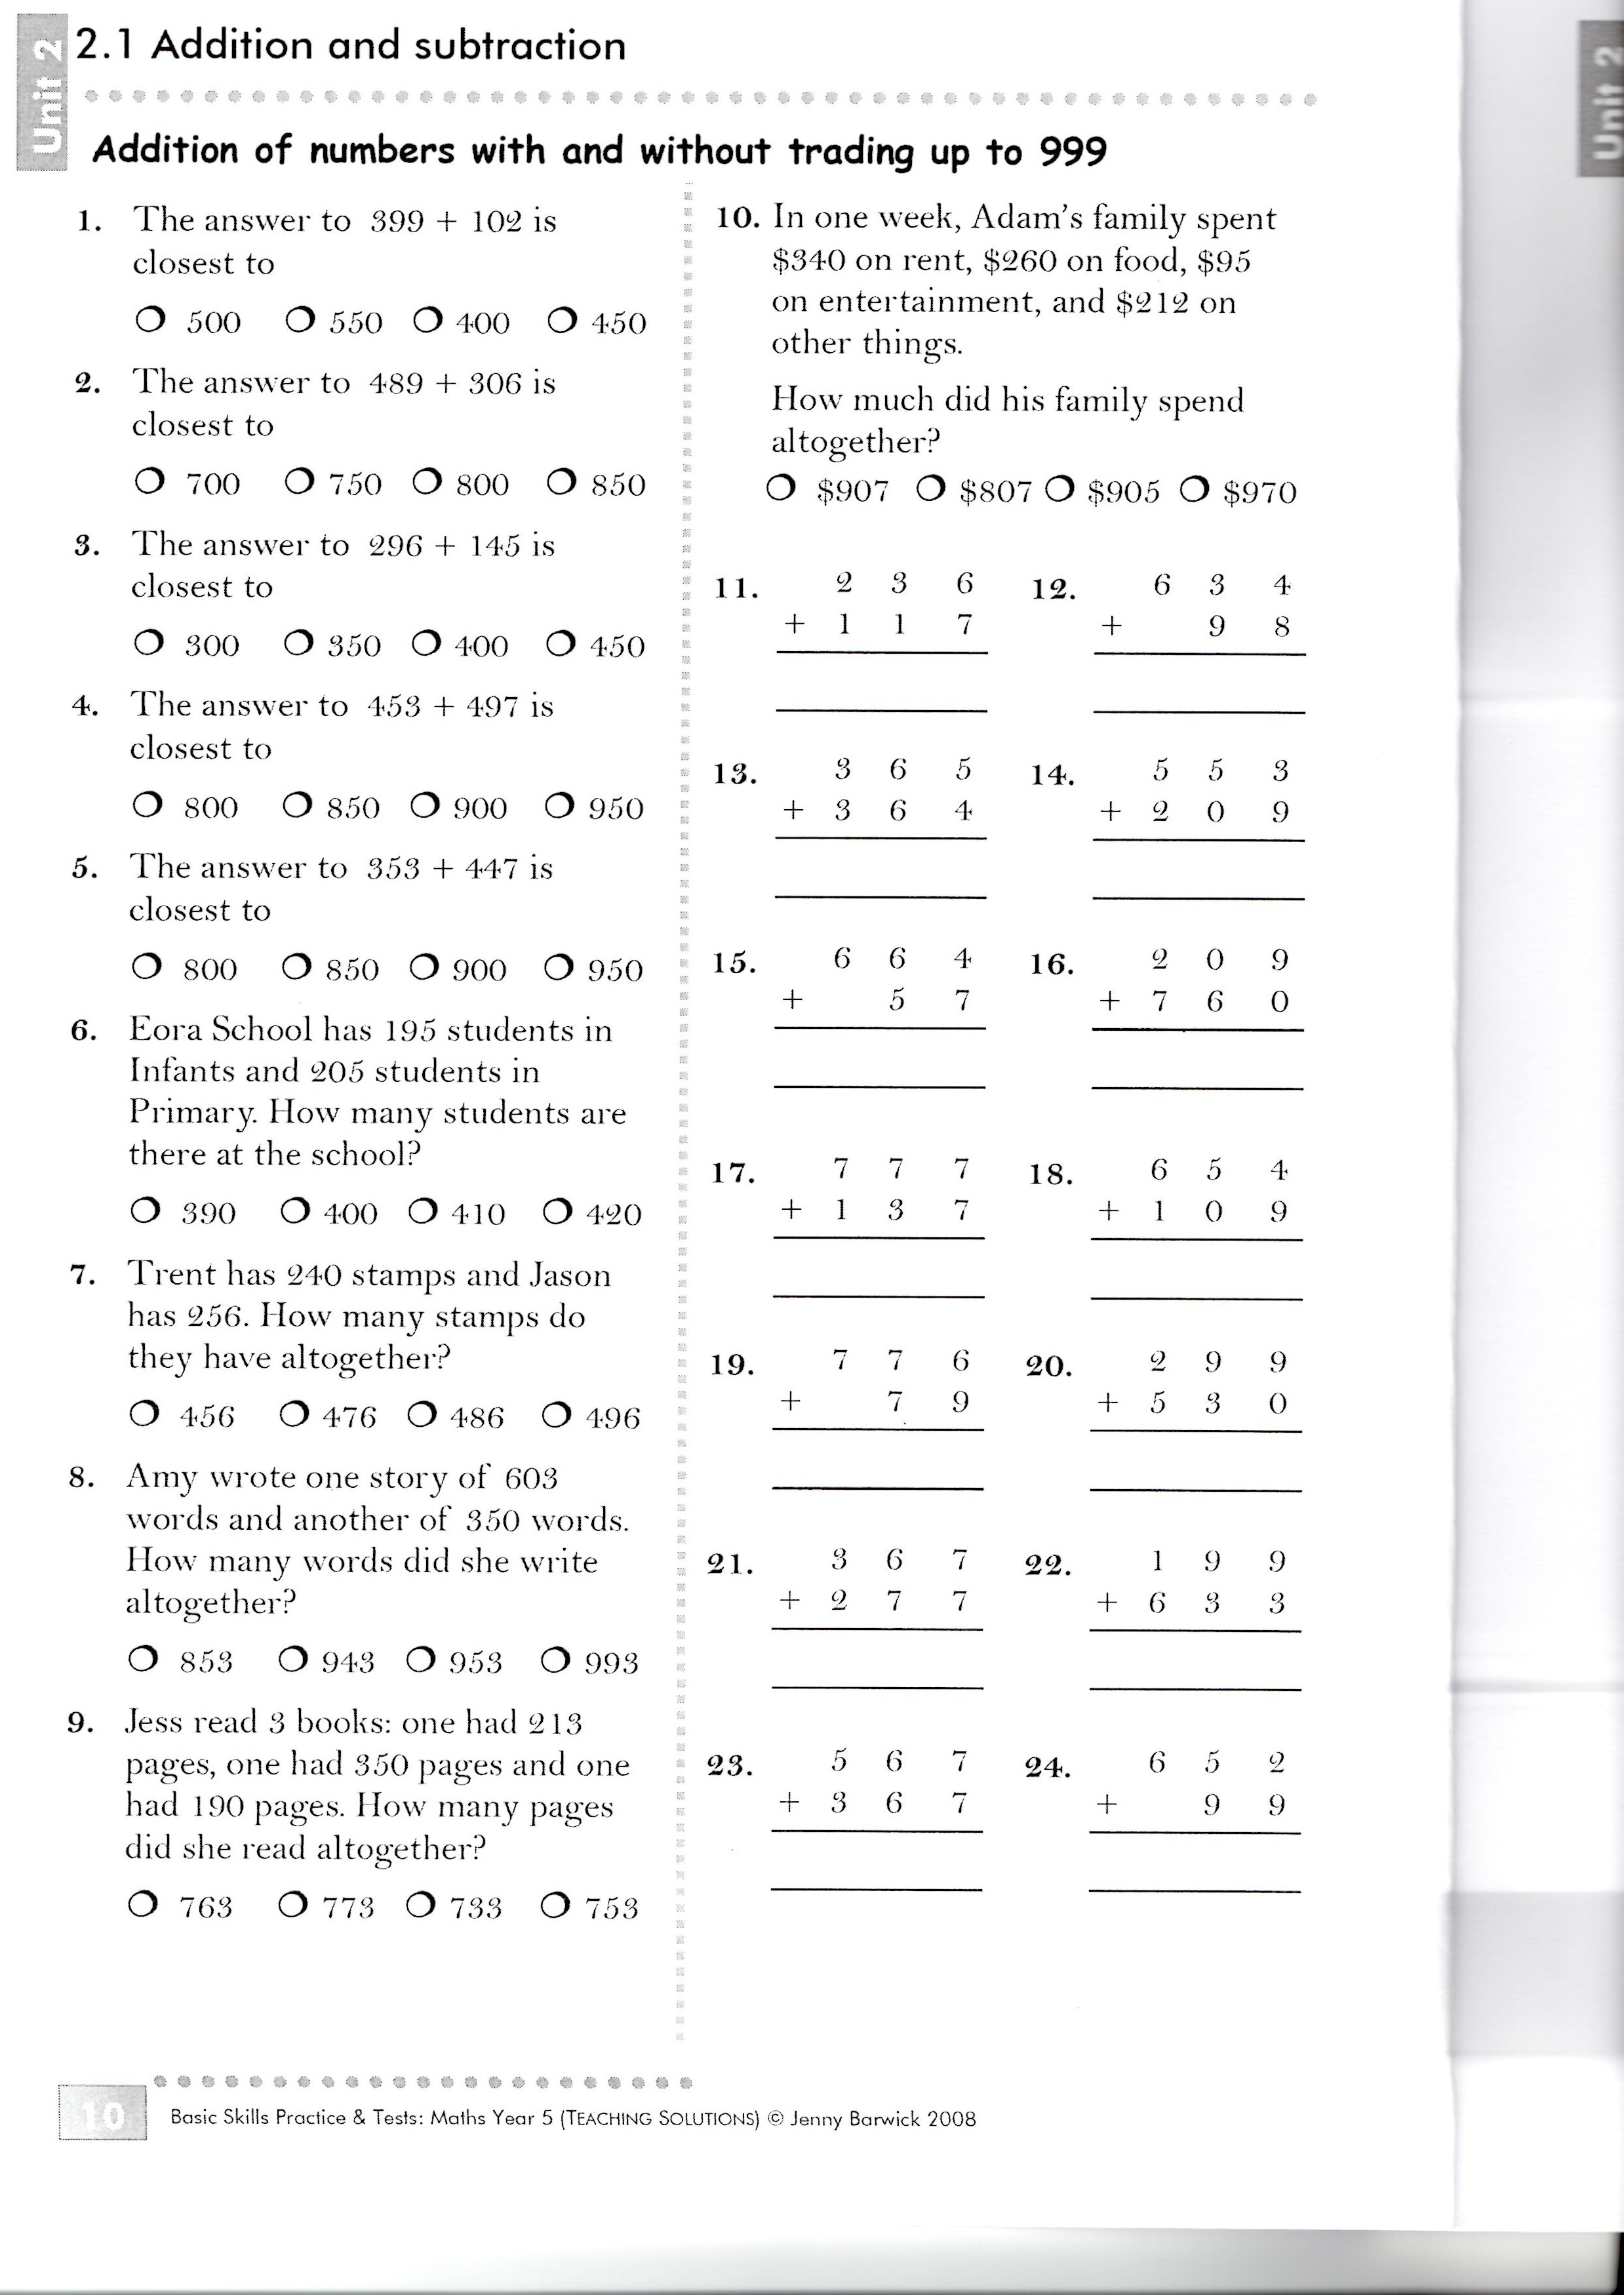 Best Basic Math Skills Assessment Printable Harper Blog 28820 Hot Sex Picture